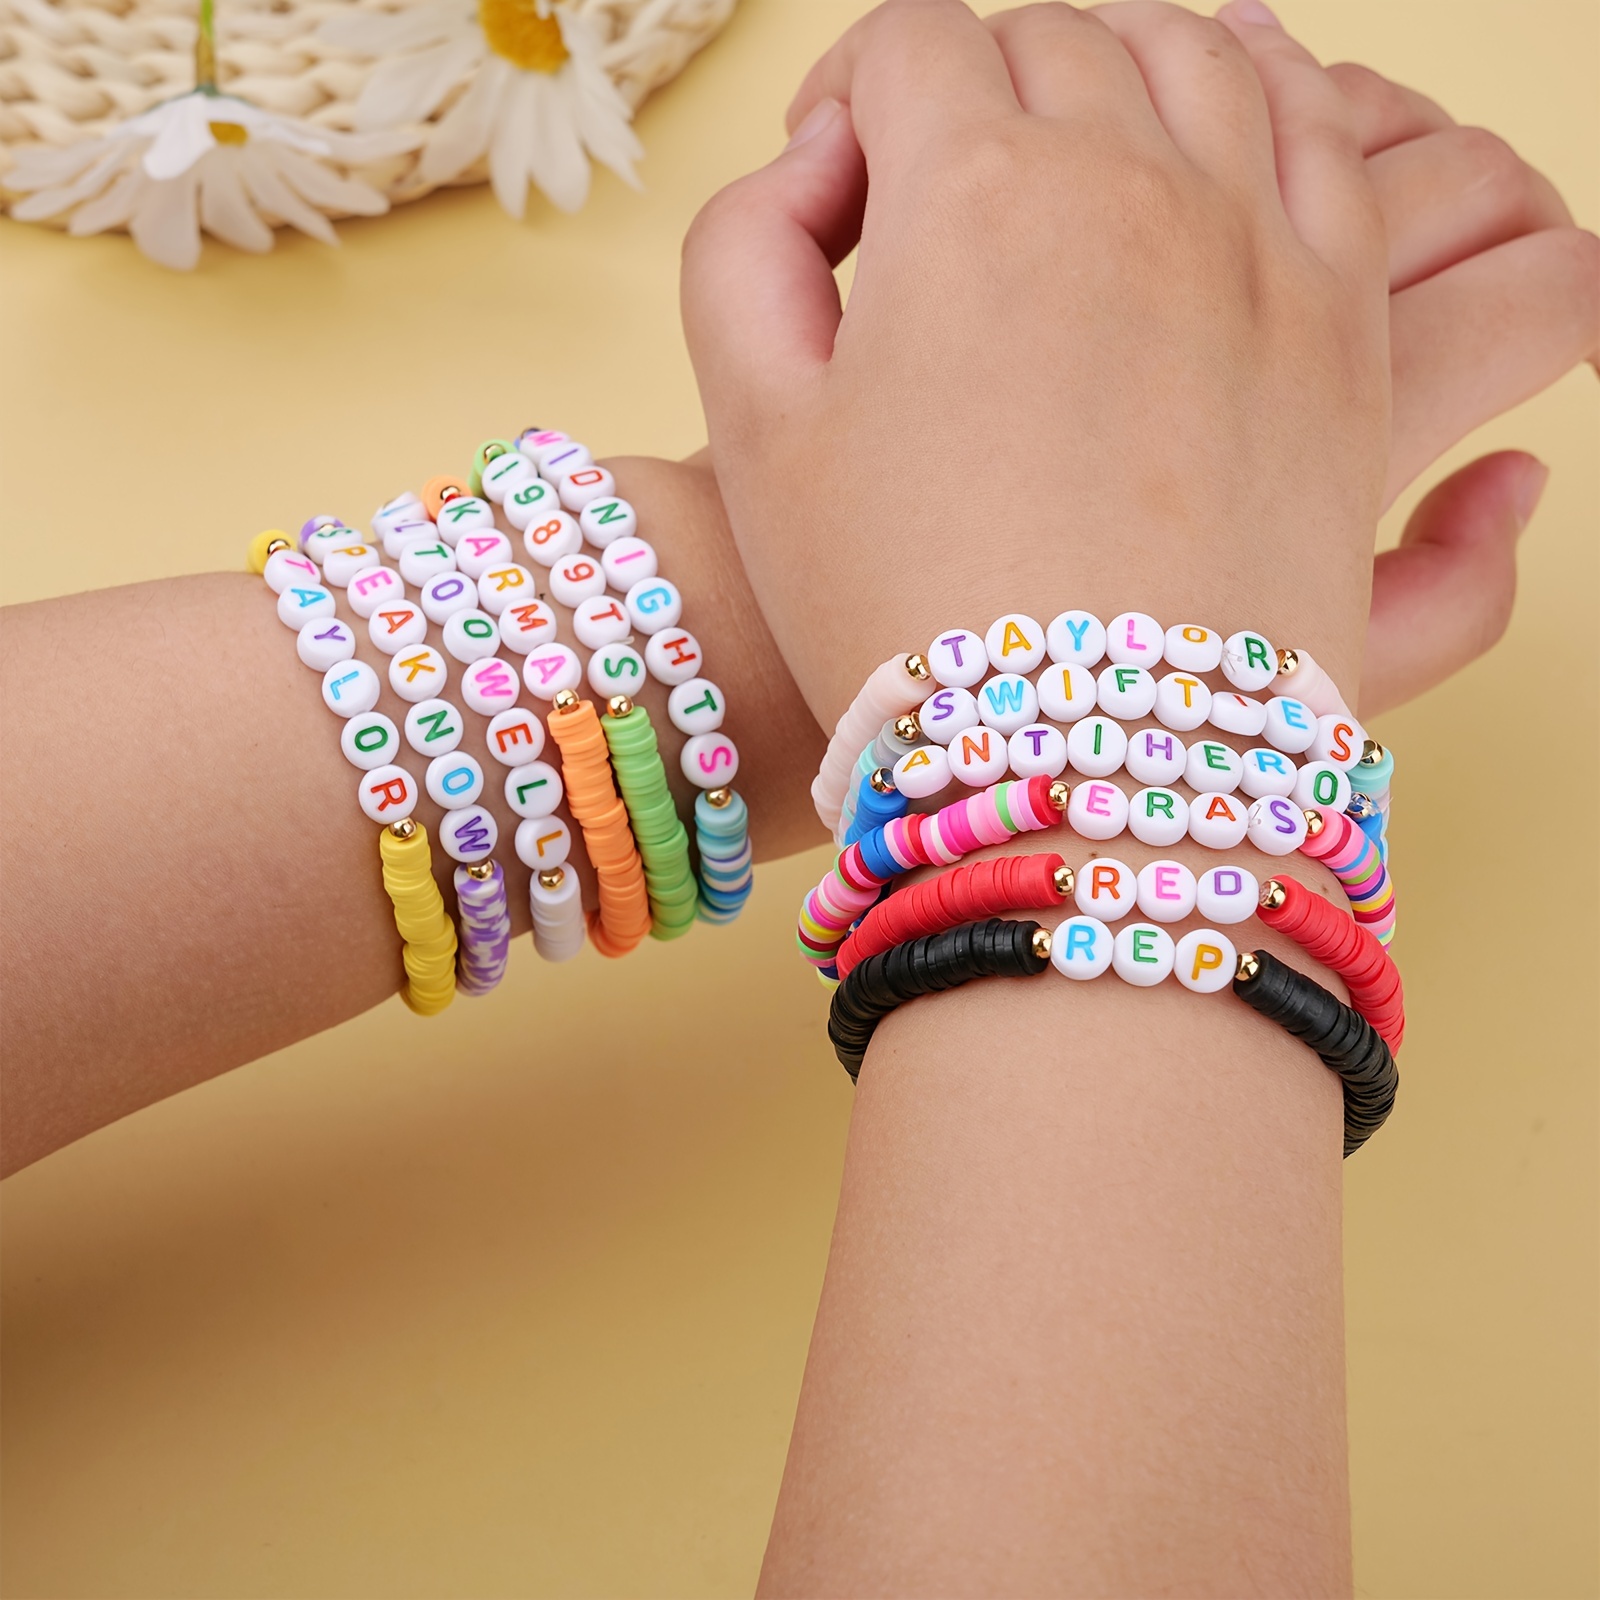 

12-piece Women's Fashion Friendship Bracelets Set - Colorful, Simple Style Wrap Bracelets For Parties & Music Festivals - All-season Plastic Beaded Jewelry